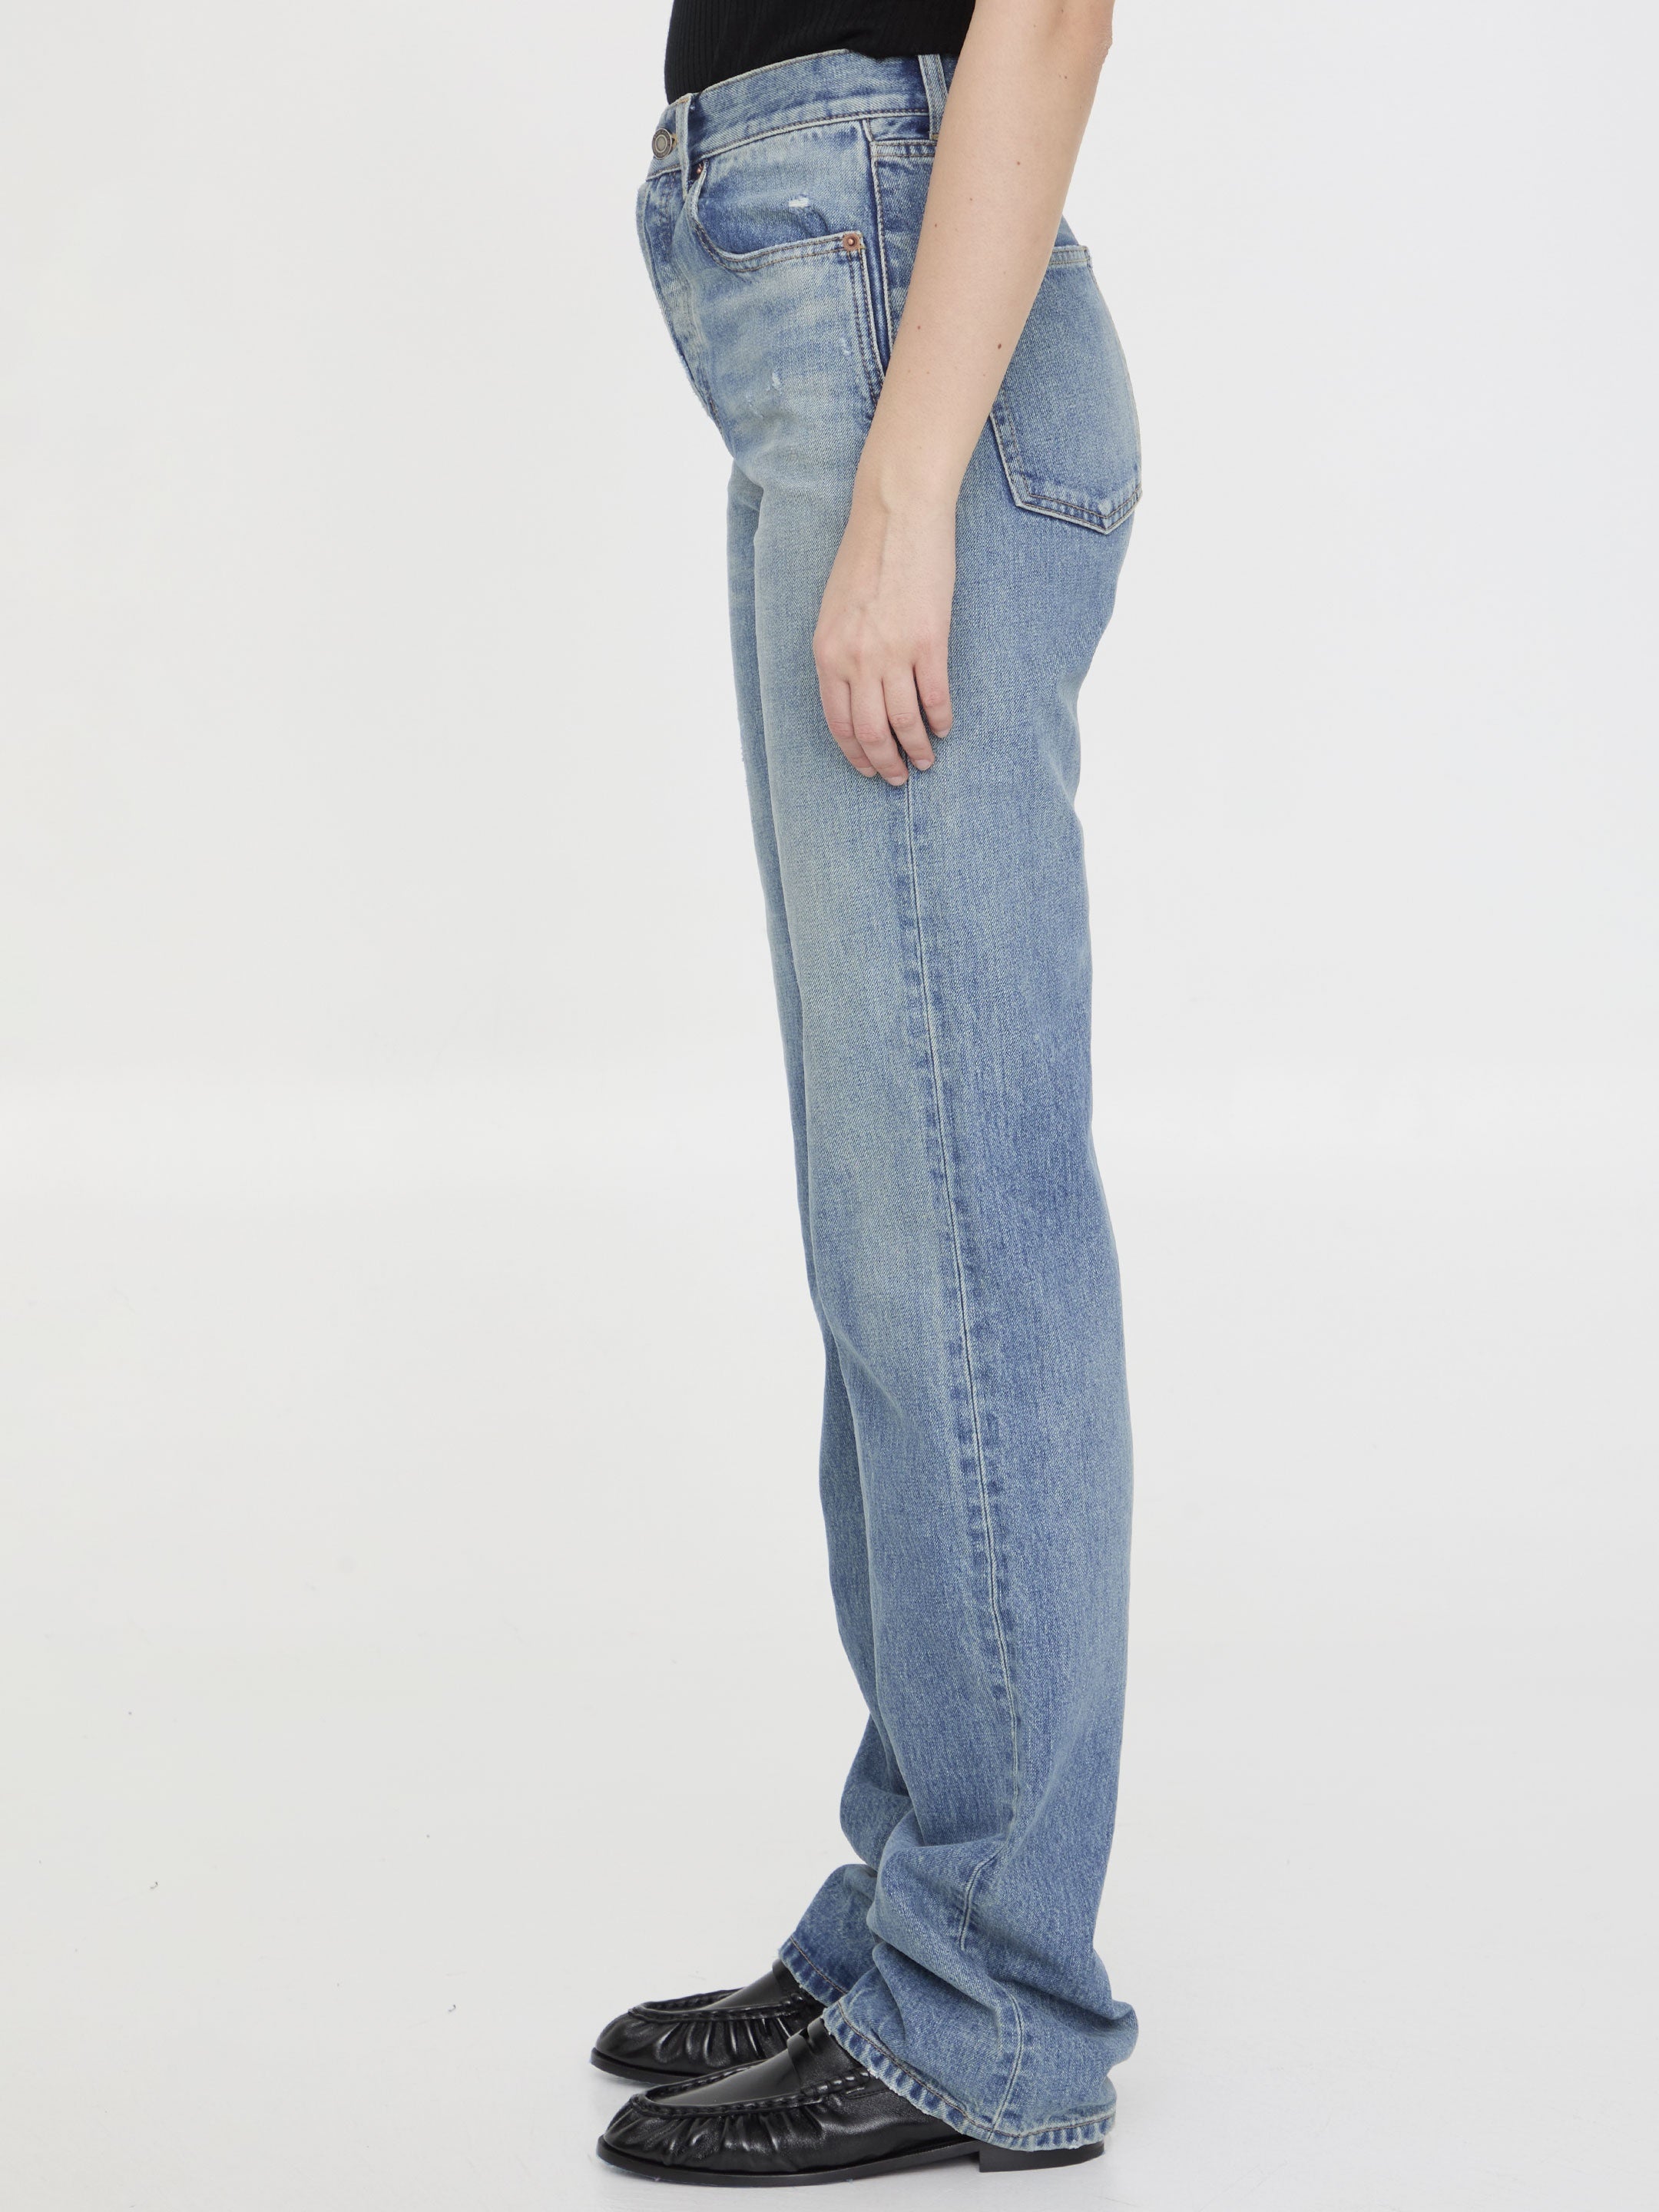 Charlotte jeans